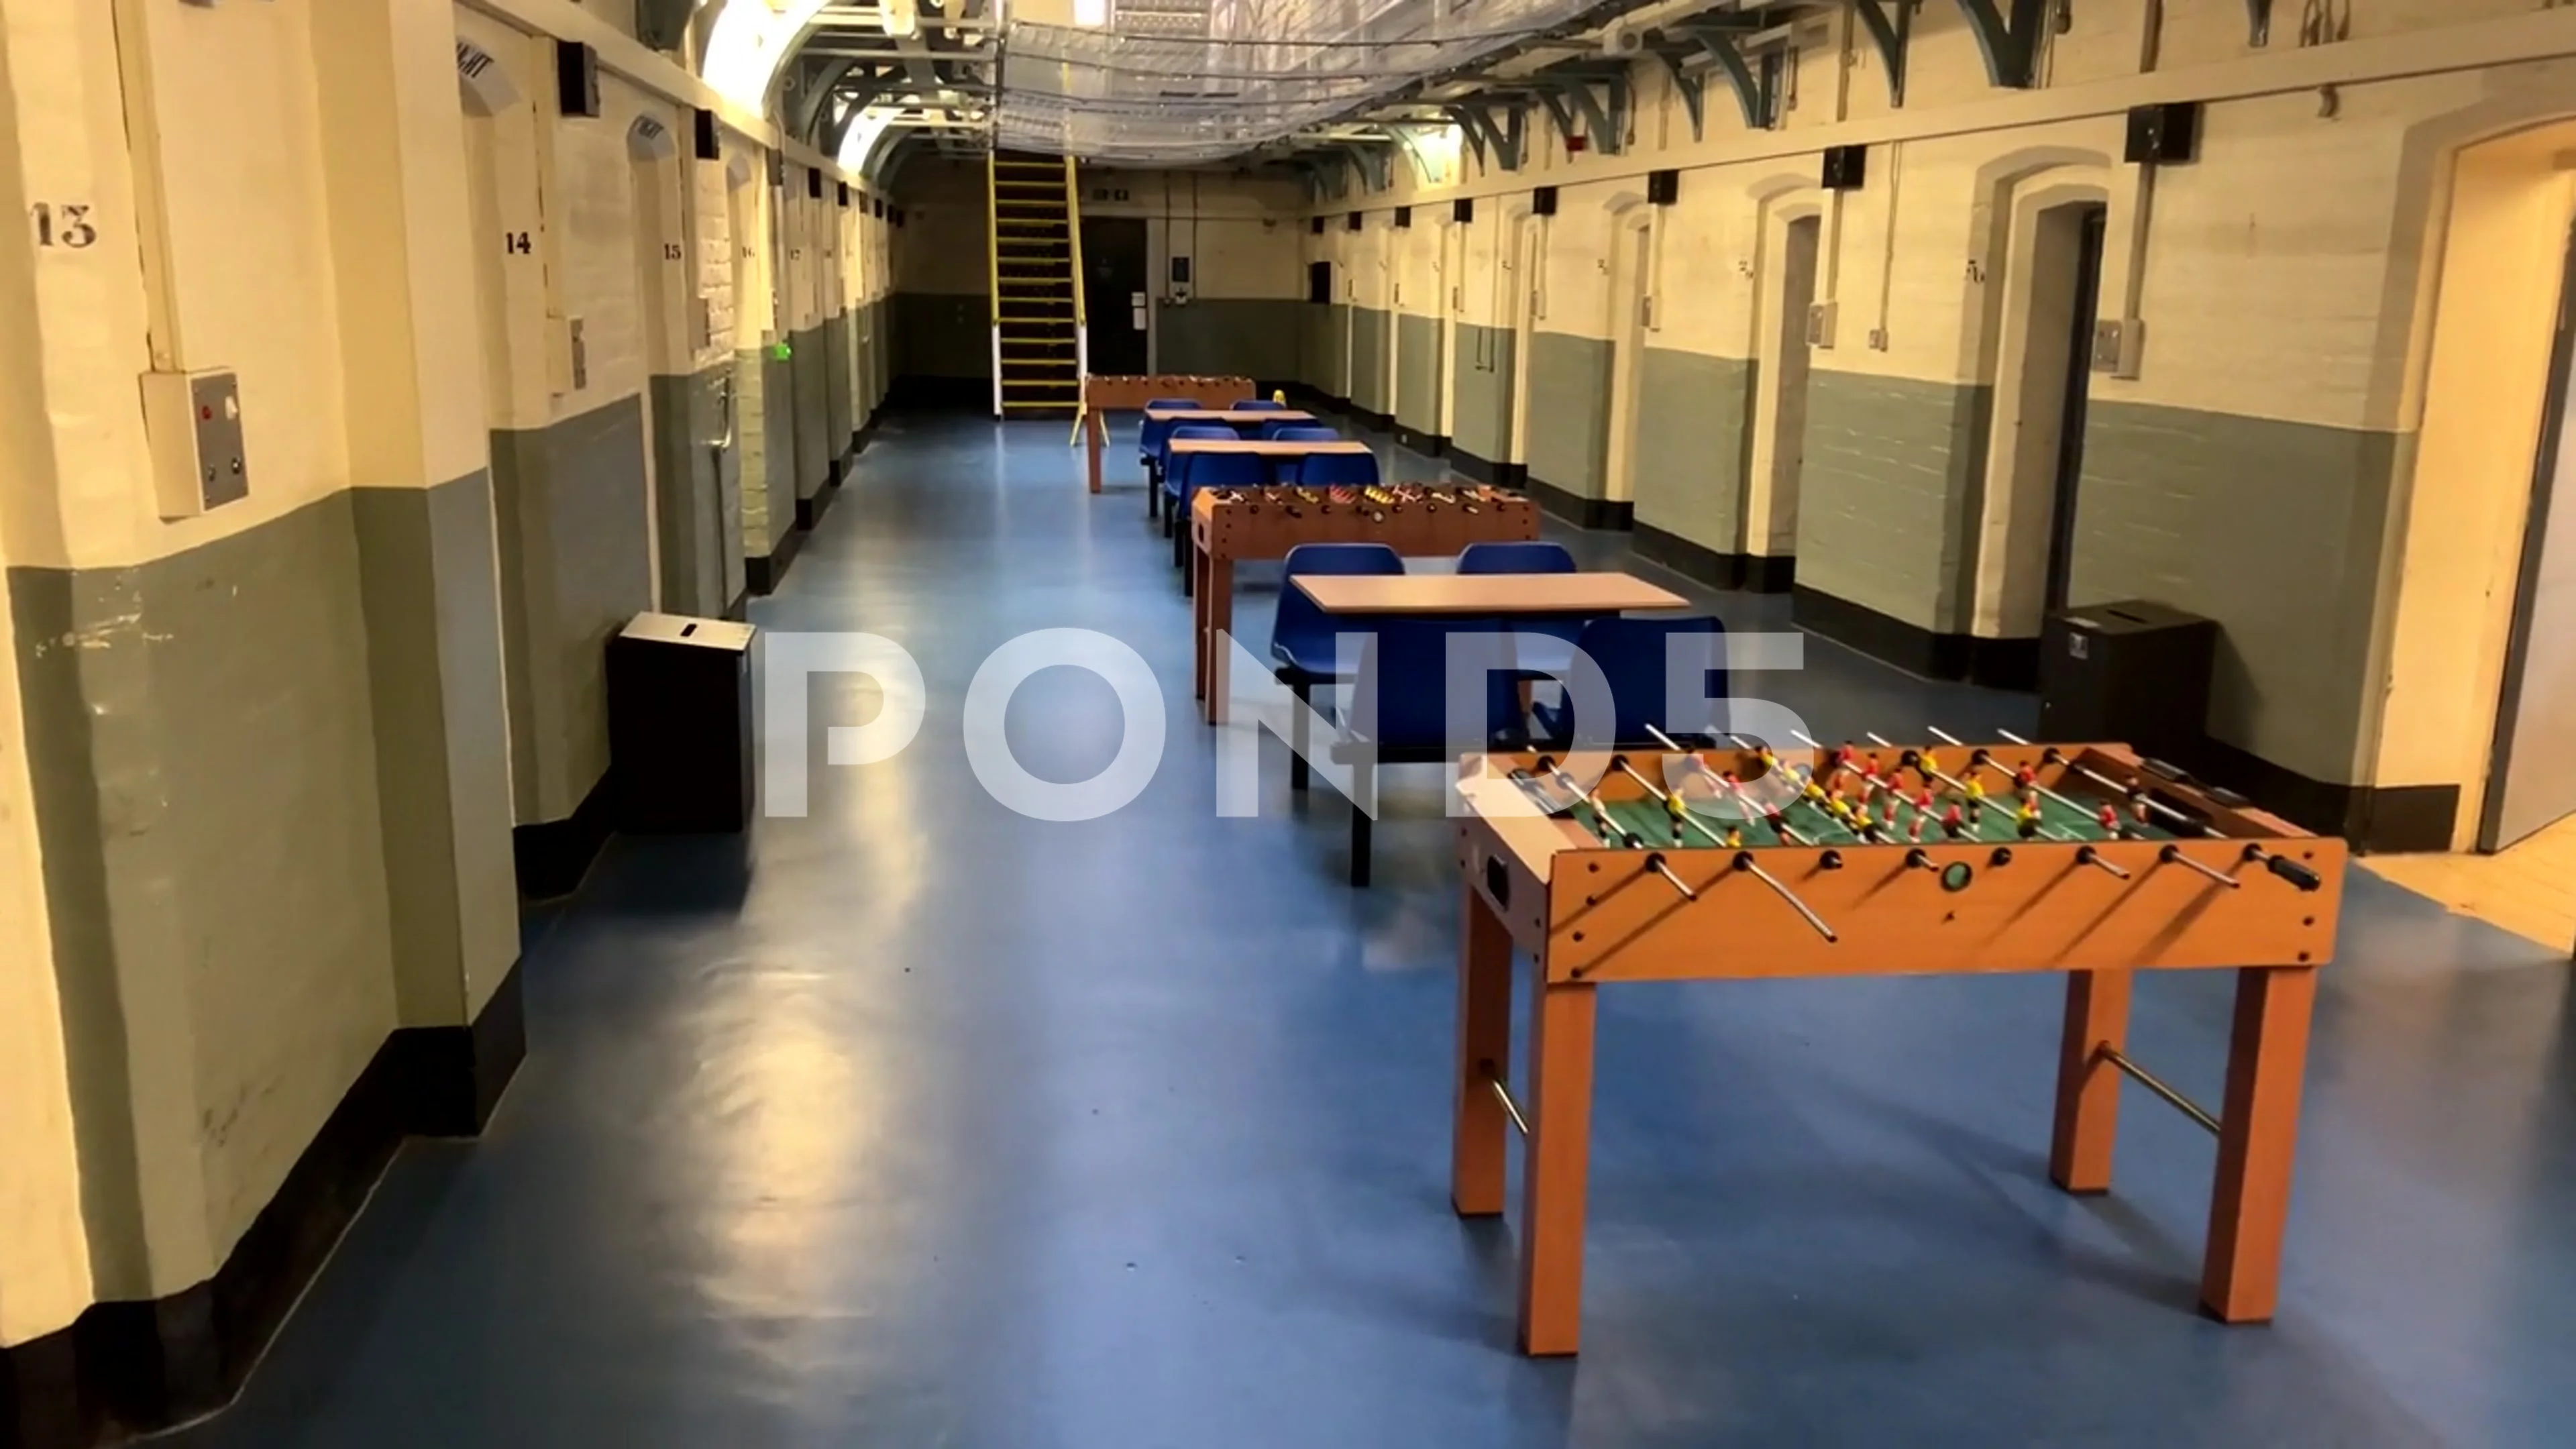 Escape Room Prison Cell  The Cell At Shrewsbury Prison